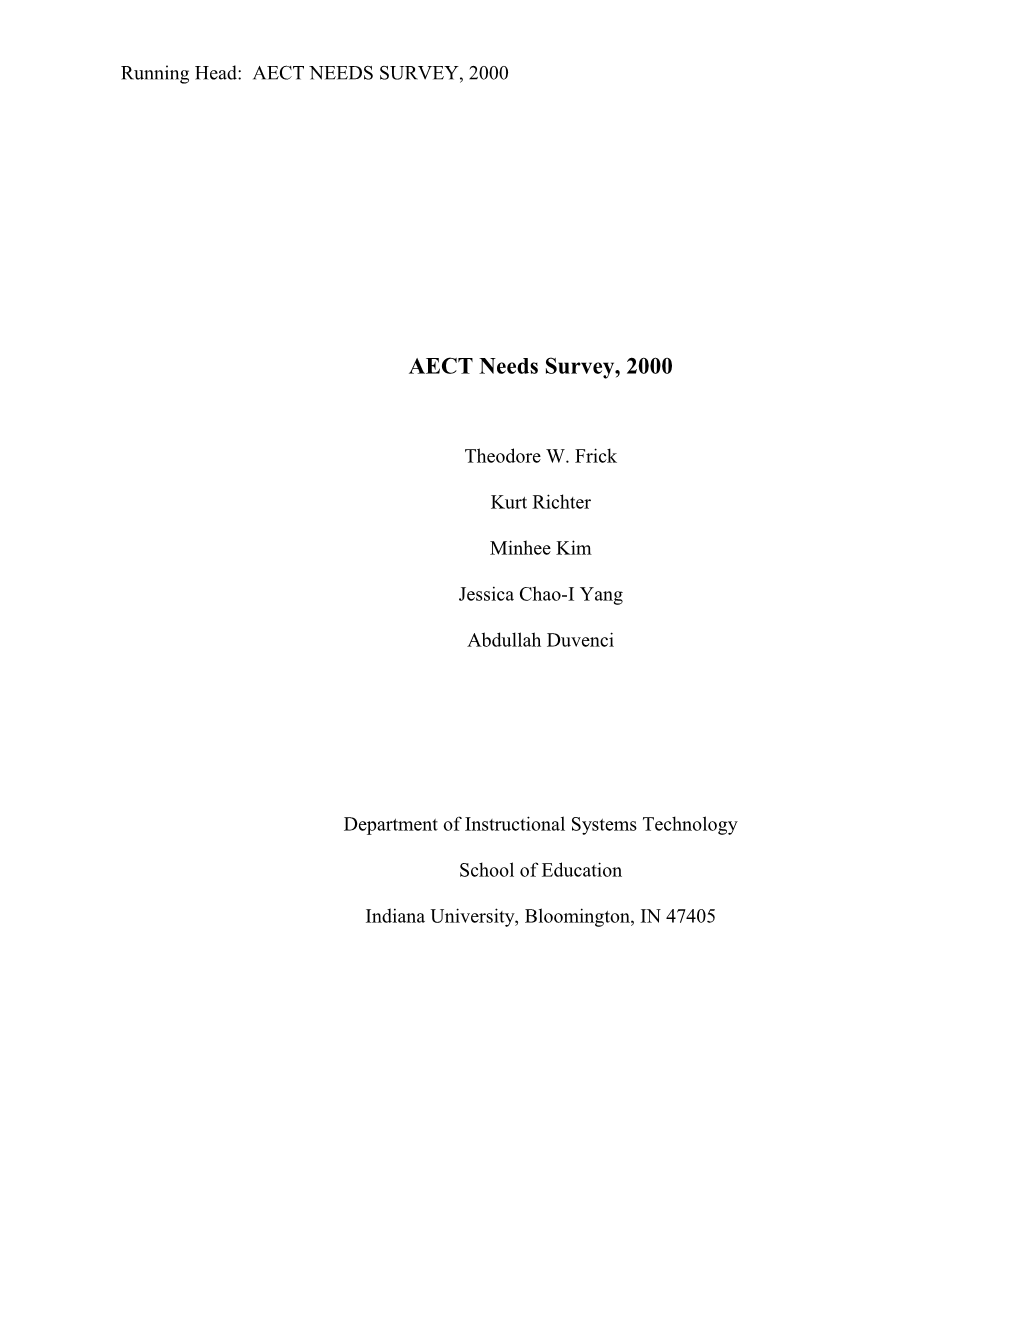 AECT Needs Survey, 2000